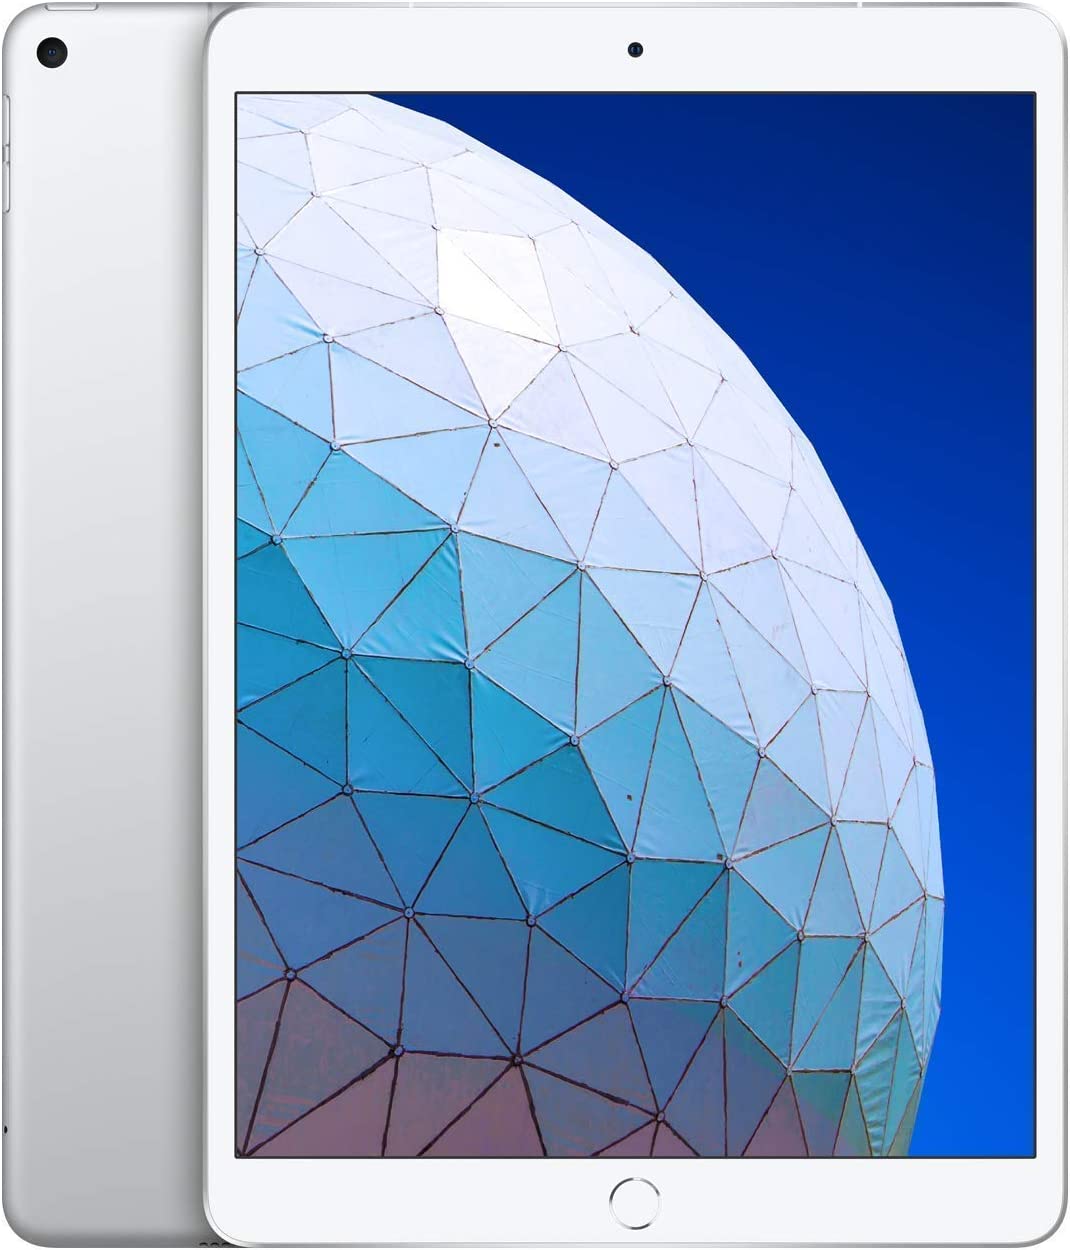 Apple iPad Air (第３世代) Wi-Fi 64GB スペースグレイ シルバー ゴールド (整備済み品) 3ヶ月保証 中古  充電ケーブル付き : ipadair3 : Belando - 通販 - Yahoo!ショッピング